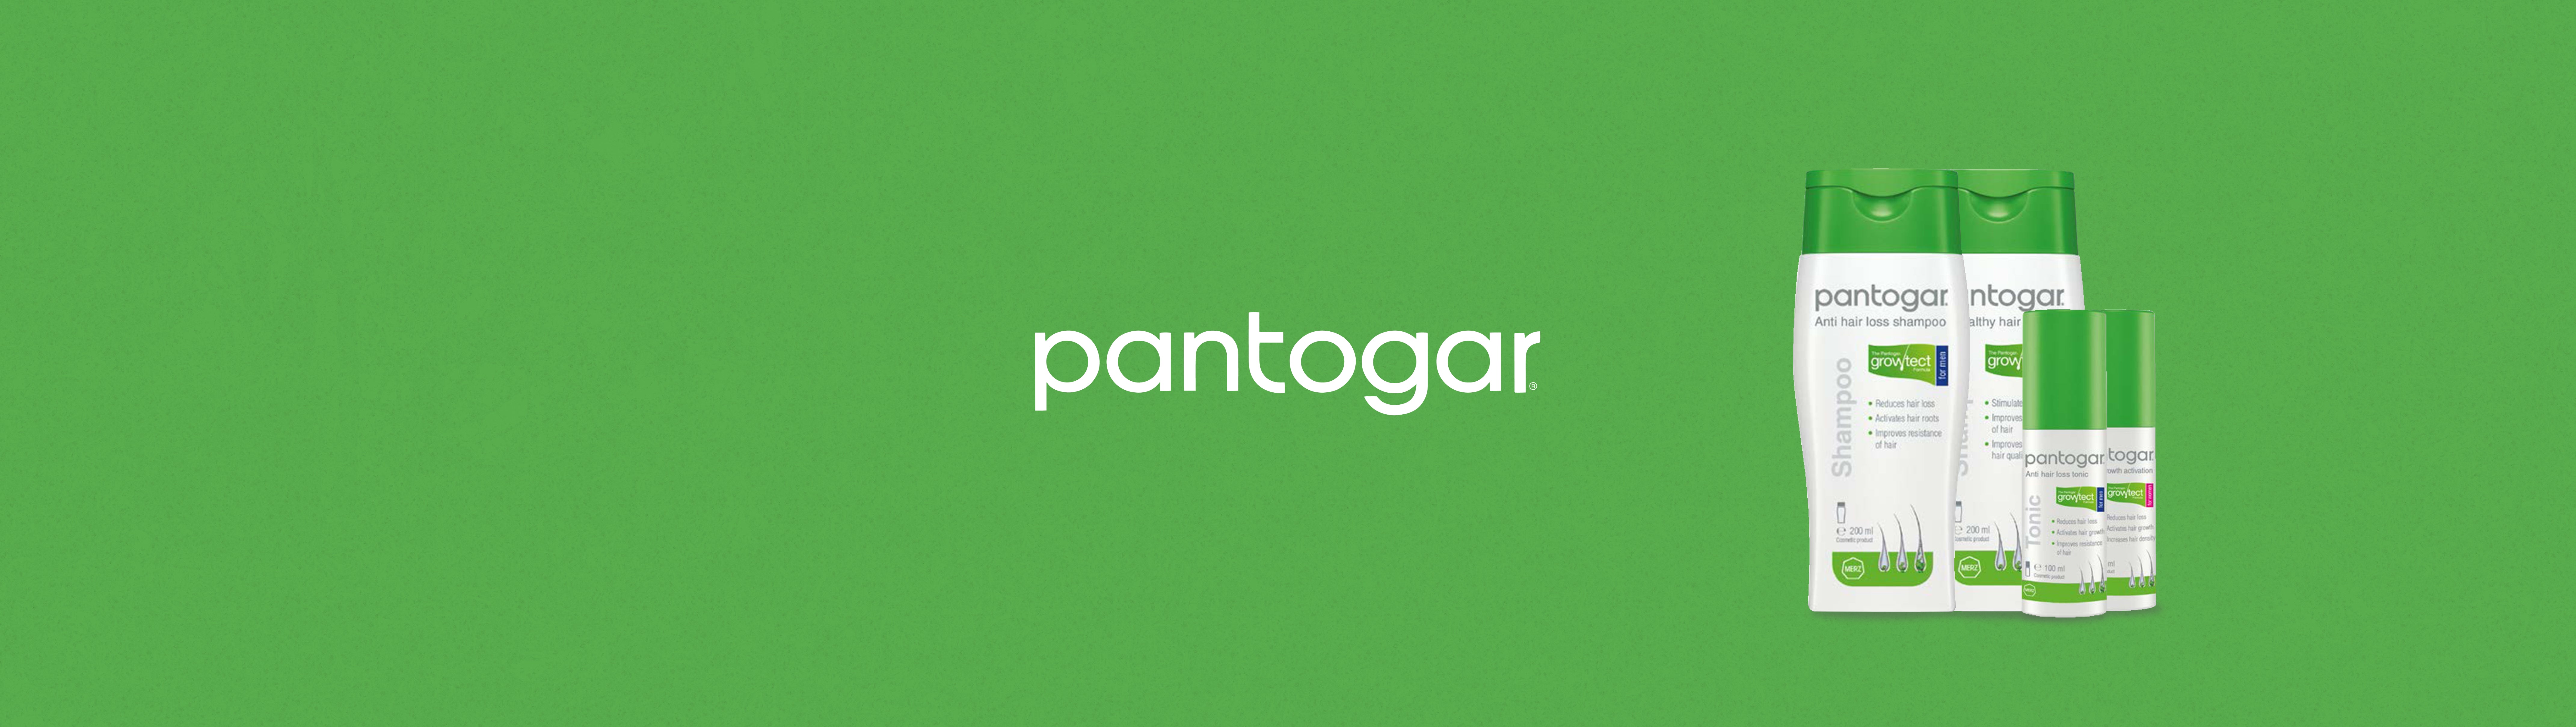 pantogar-FV-desktop